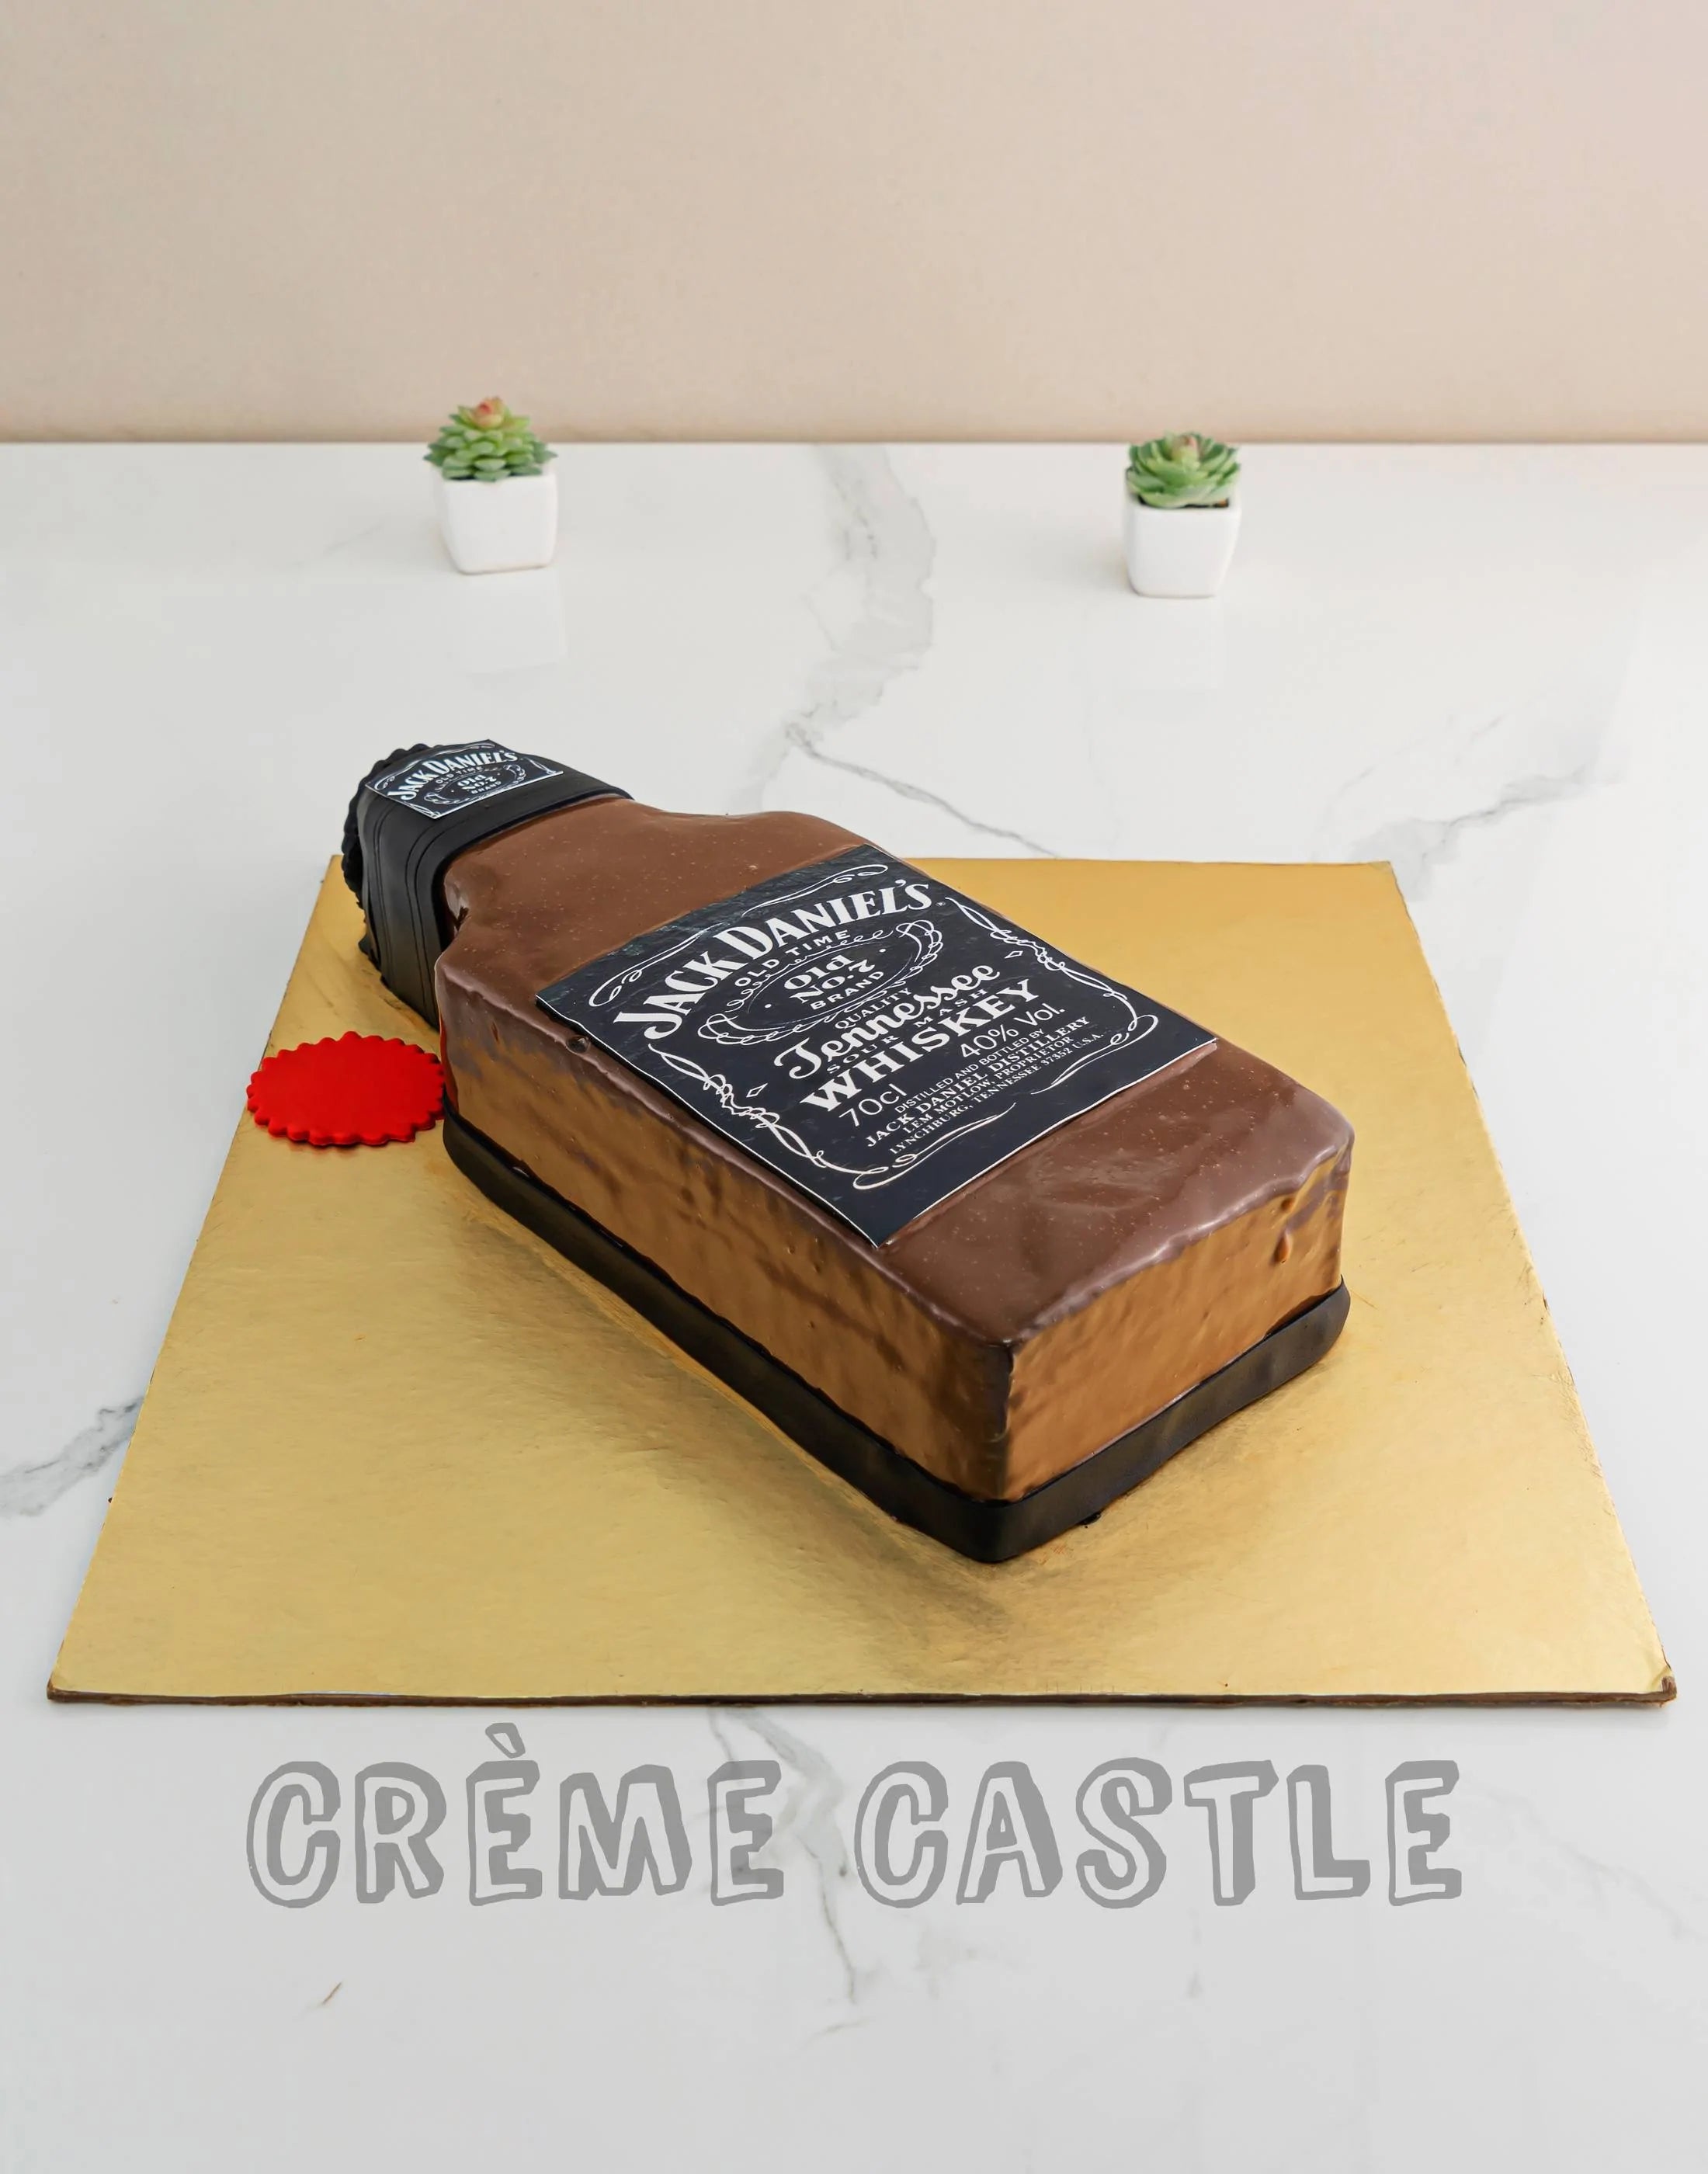 Jack Denials bottle Cake  Photo Print Cake  Levanilla 